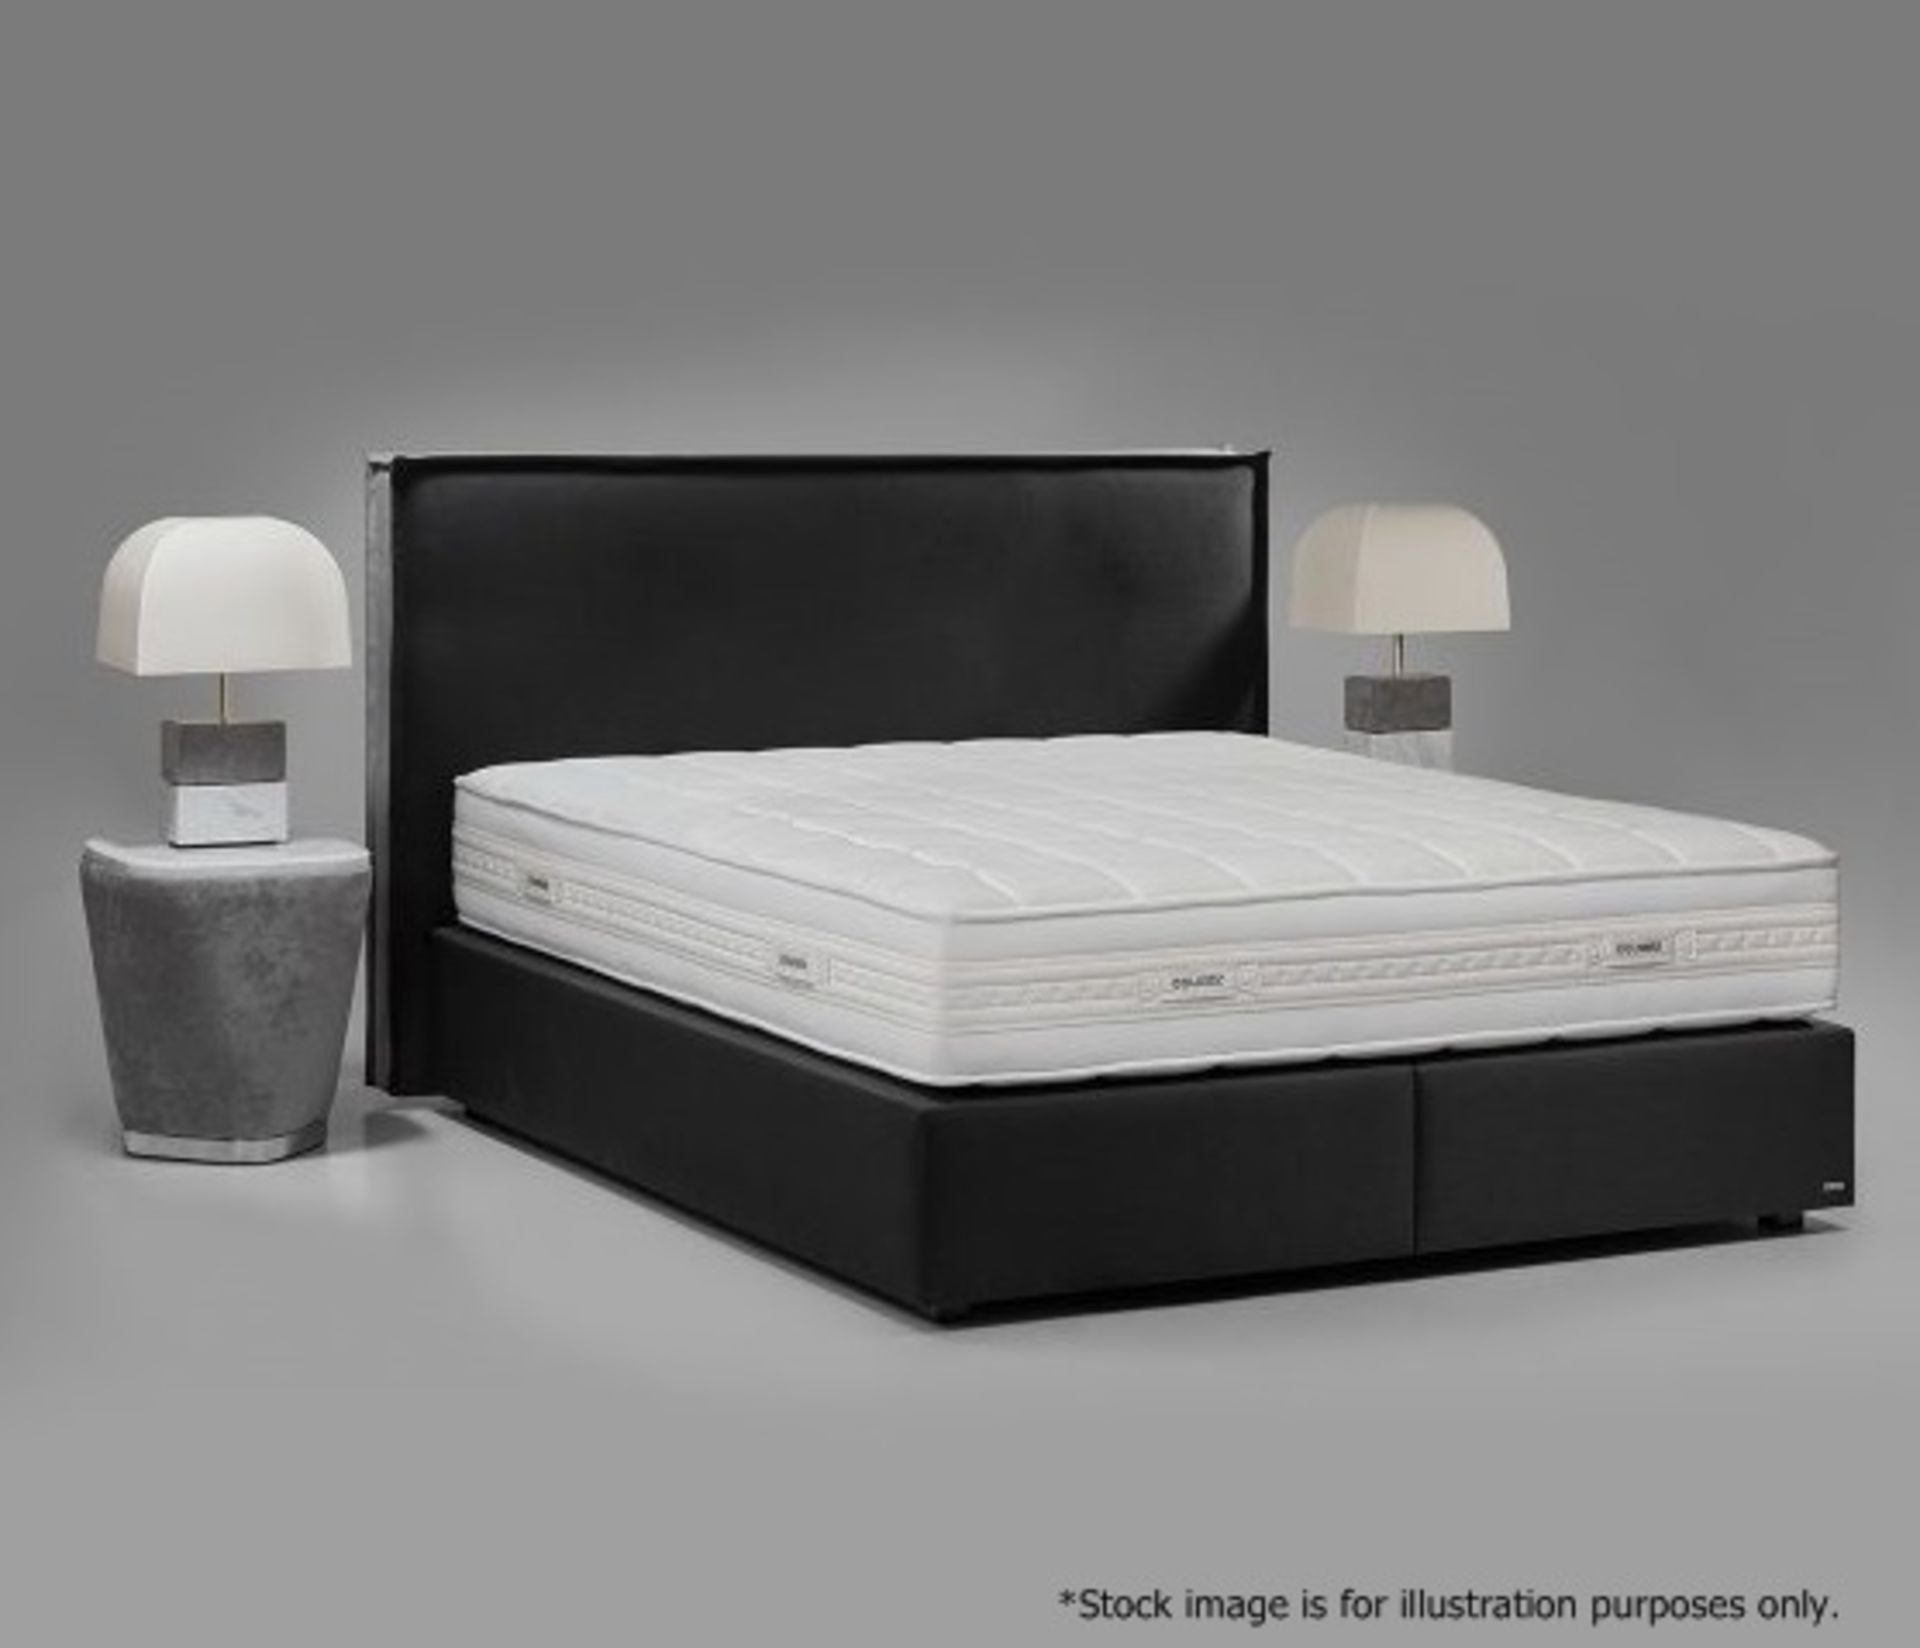 1 x COLUNEX 'Elite' Super Kingsize Divan Bed Base In A Grey Leather RRP £3,008 - Image 8 of 8